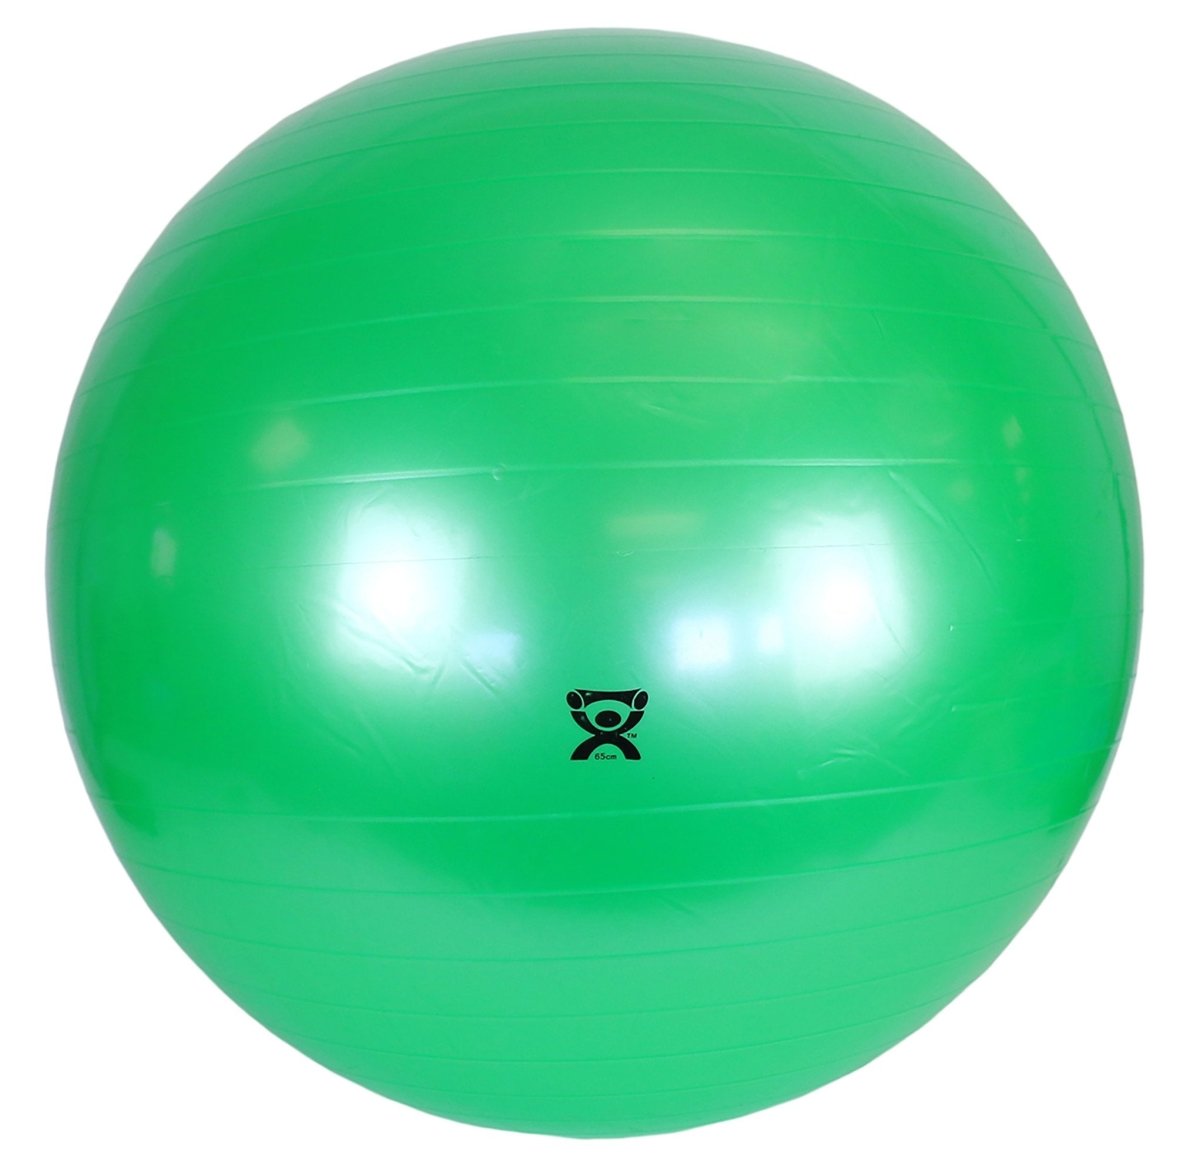 CanDo Inflatable Exercise Ball, Green, 26 Inches - 584386_EA - 1